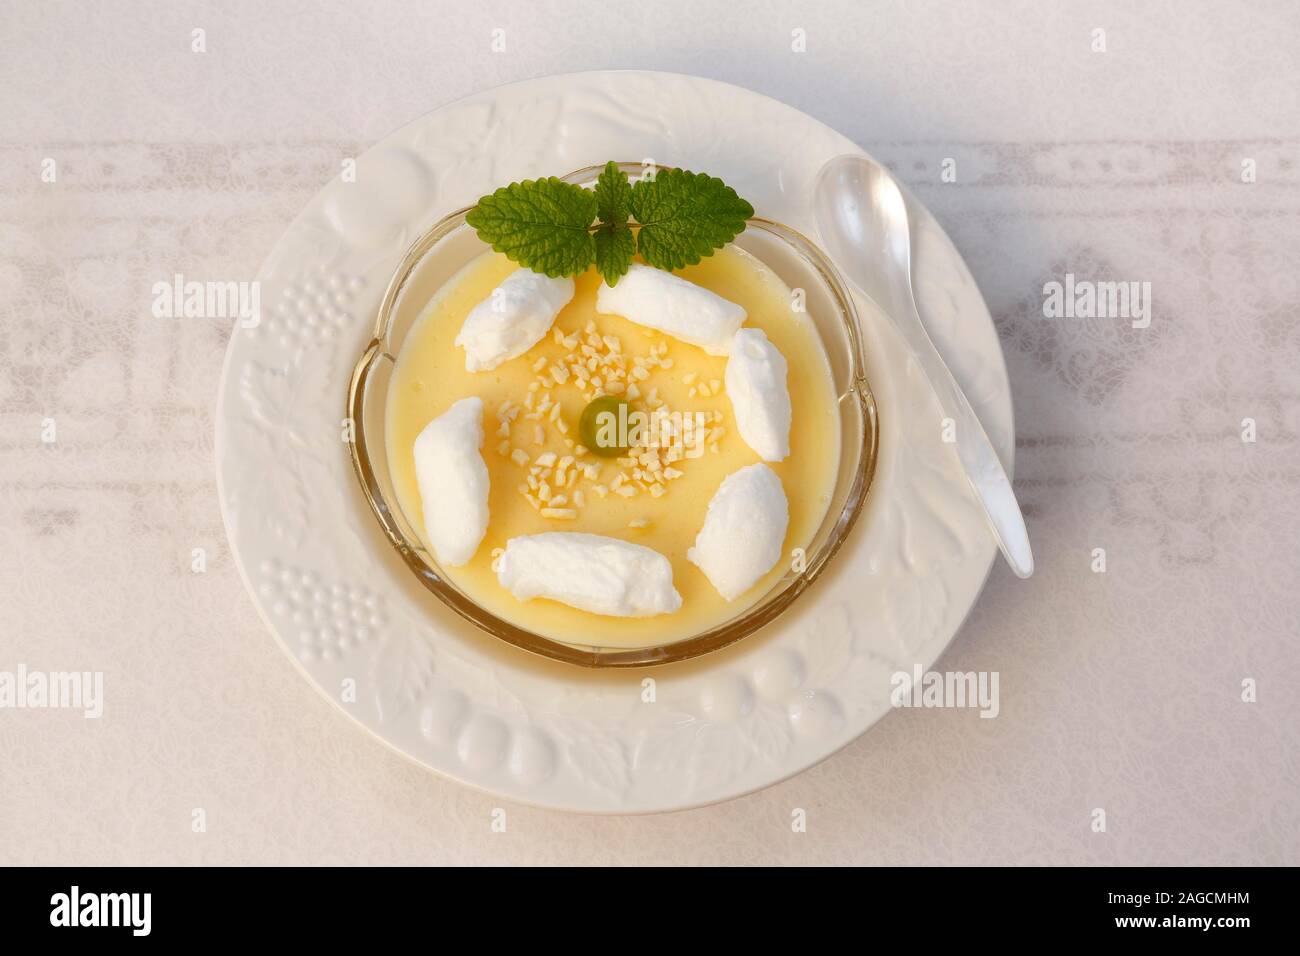 Swabian dessert in dessert bowl, Stuttgart wine cream with protein foam, Germany Stock Photo